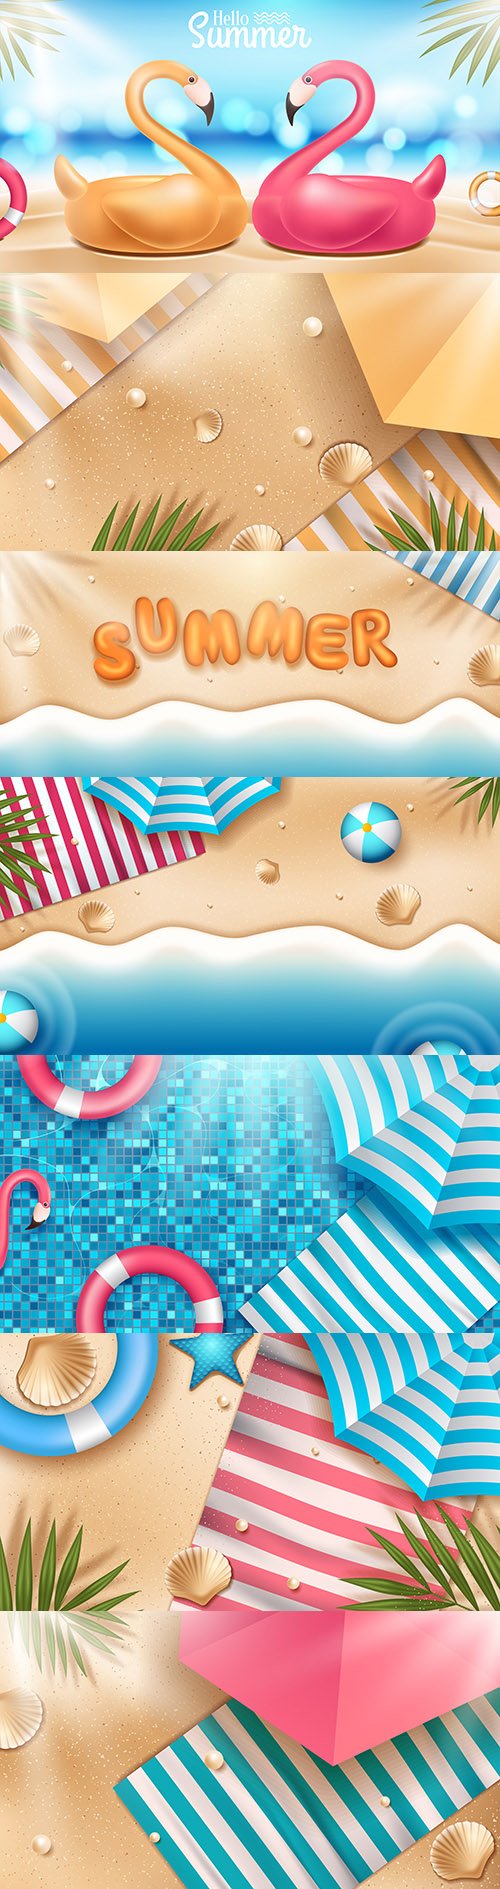 Summer holidays on sandy beach realistic illustrations